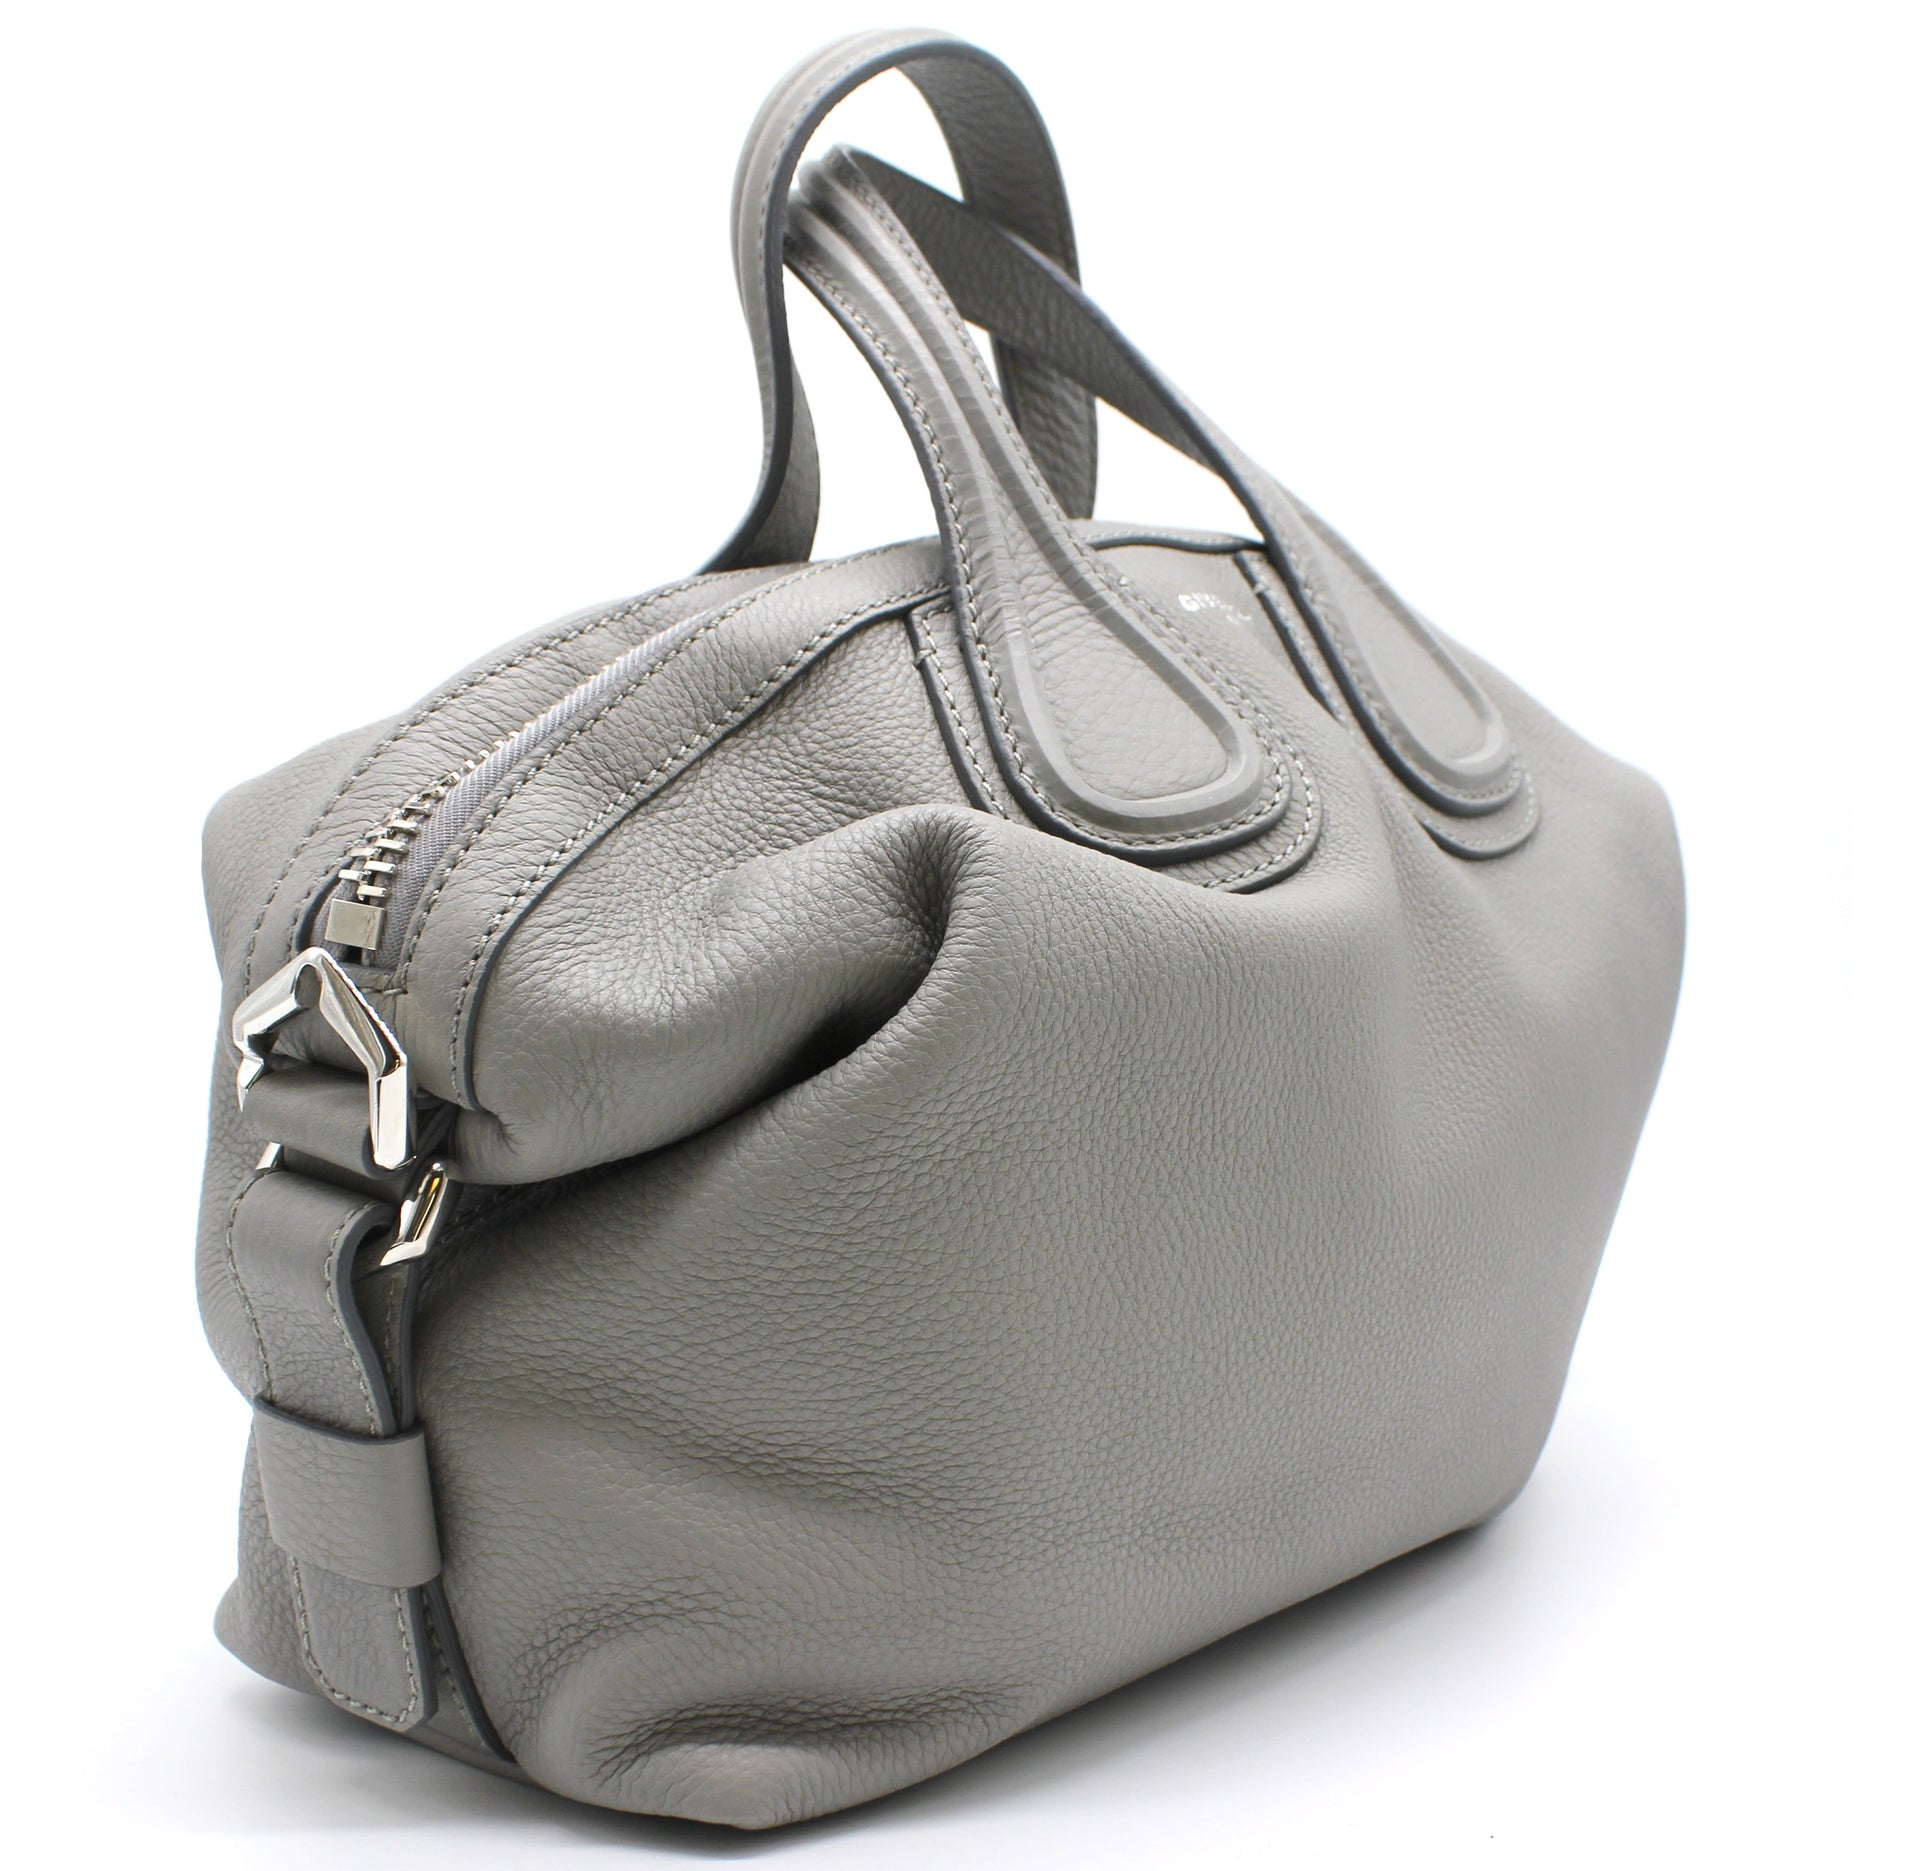 Givenchy Small Nightingale Tote Bag